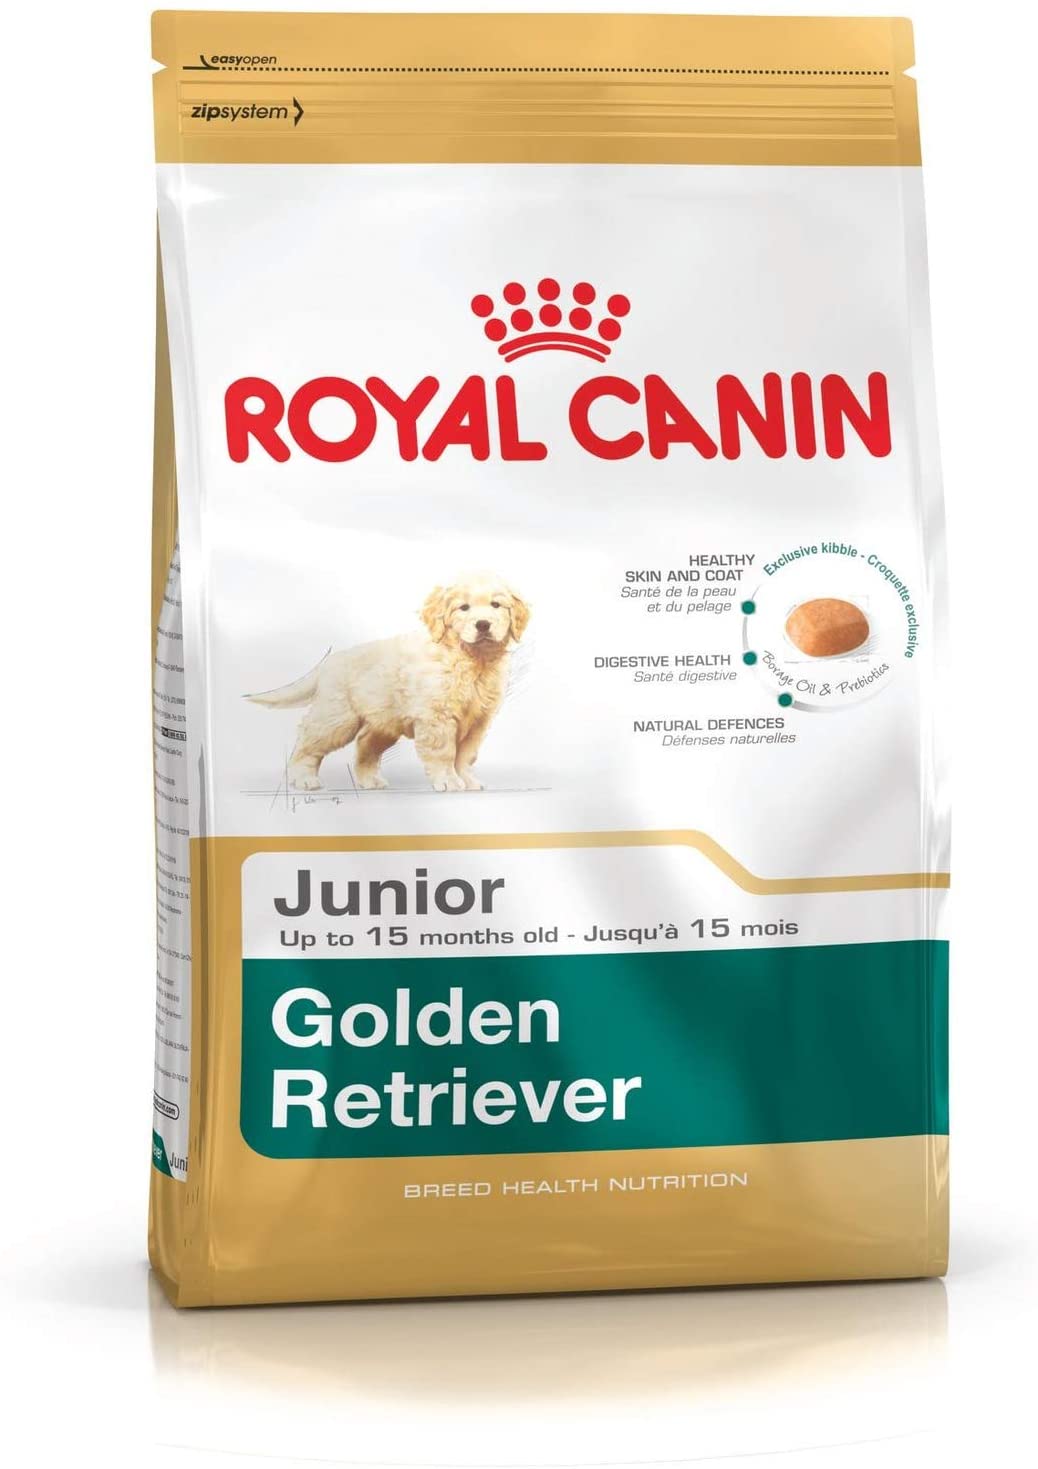  Royal Canin C-08997 S.H Golden Retriever Junior - 12 Kg 